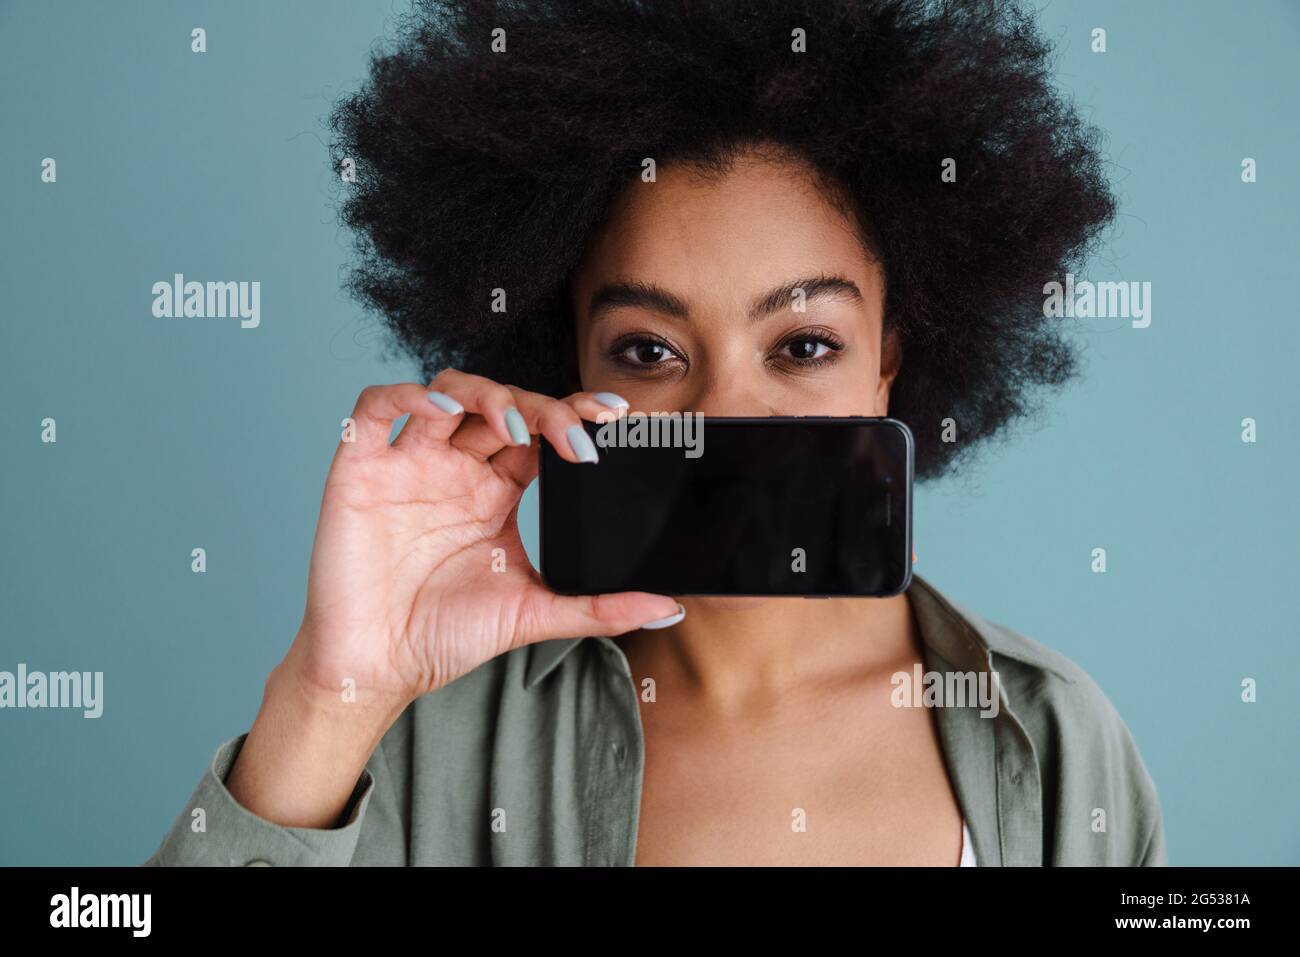 Joyful african american girl taking photo on mobile phone isolated over blue background Stock Photo